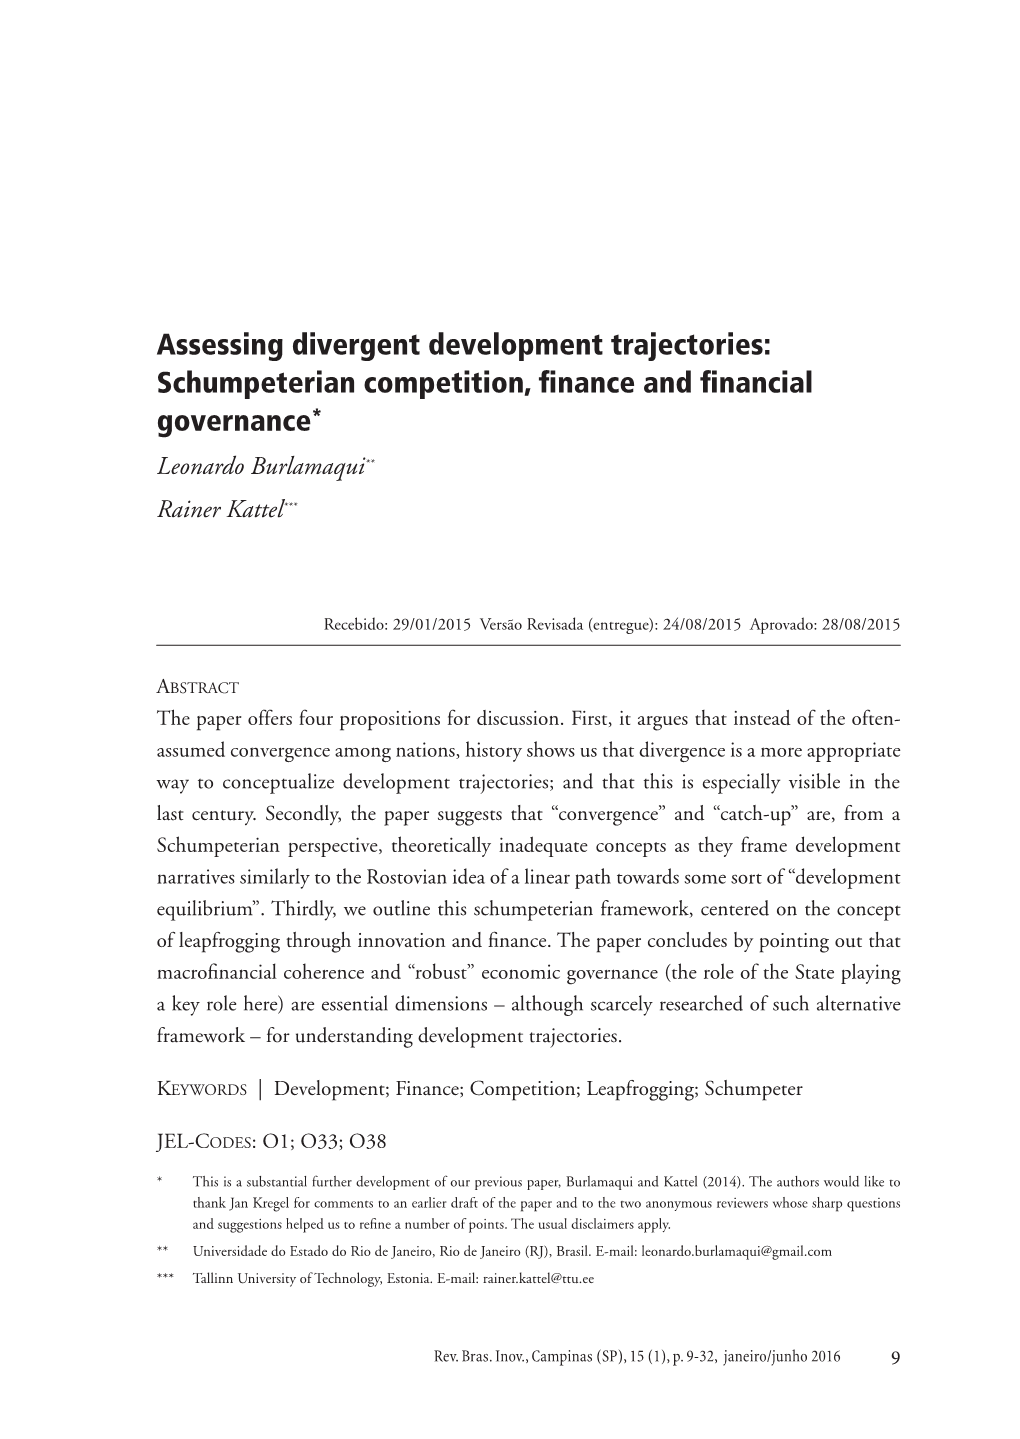 Assessing Divergent Development Trajectories: Schumpeterian Competition, Finance and Financial Governance* Leonardo Burlamaqui** Rainer Kattel***